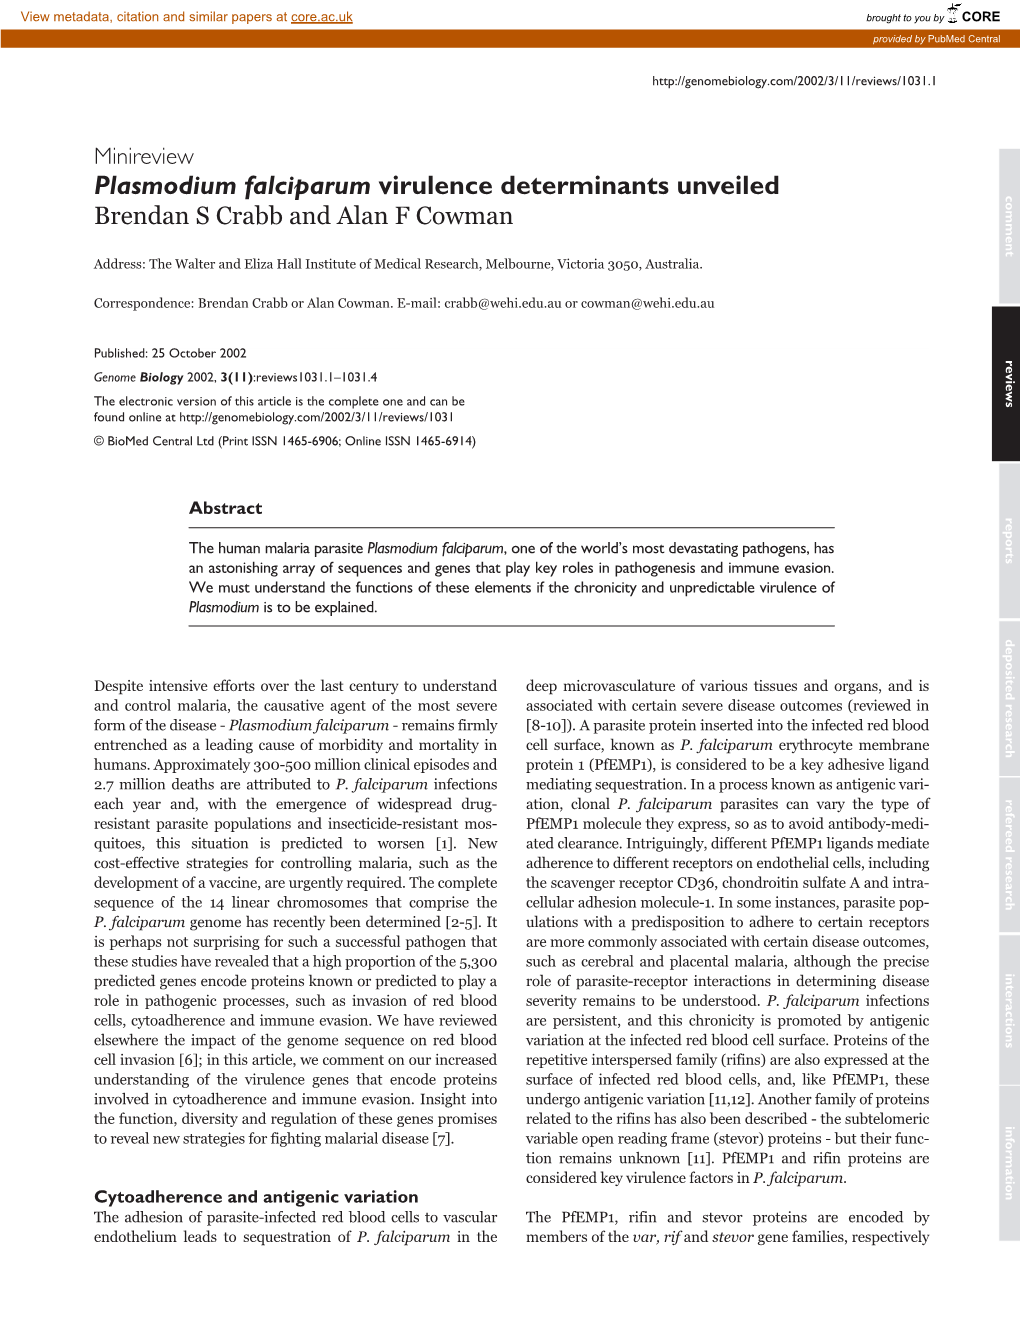 Plasmodium Falciparum Virulence Determinants Unveiled Comment Brendan S Crabb and Alan Cowman